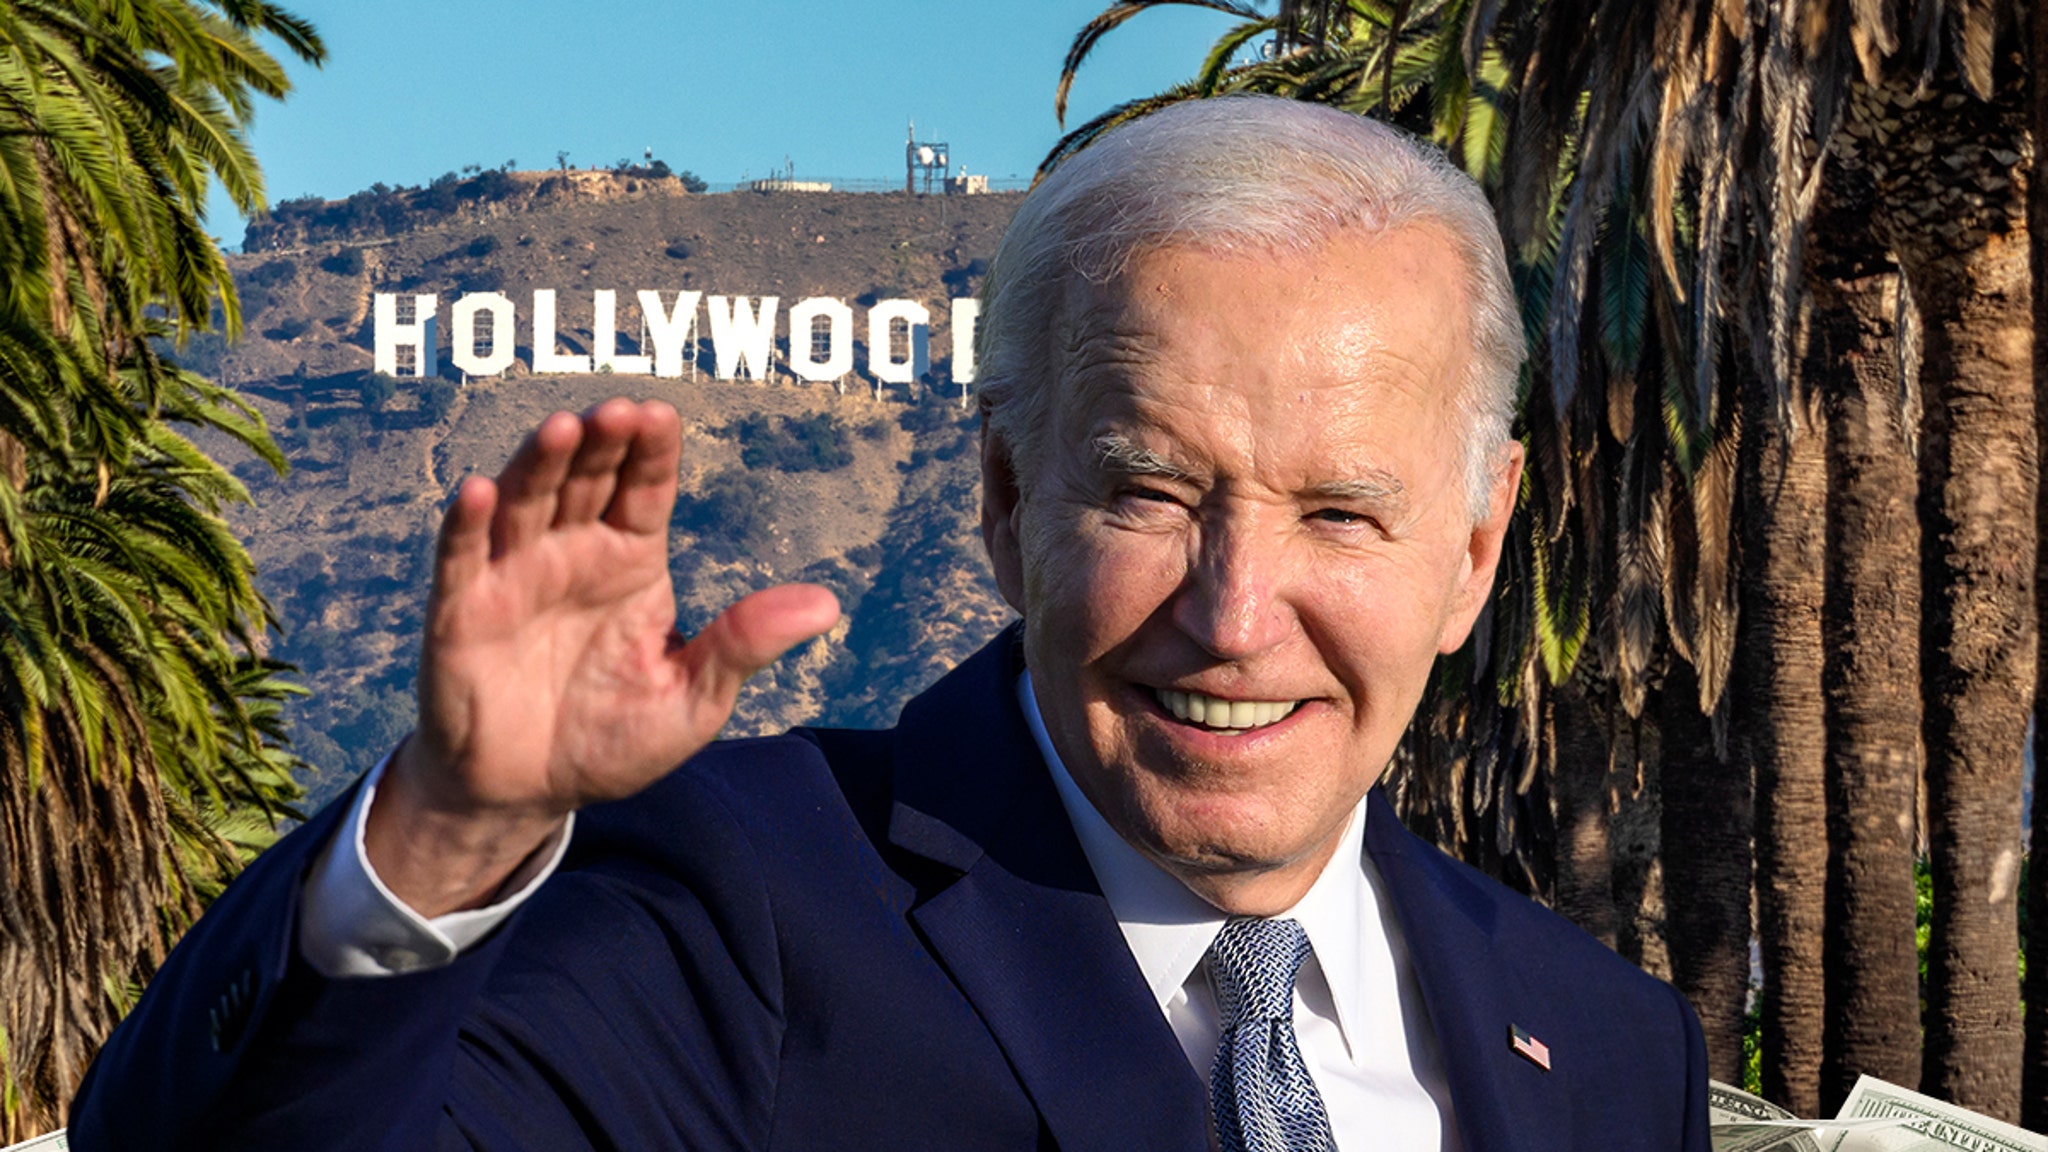 Biden's Campaign Already Raised $28 Million Heading Into Hollywood Fundraiser